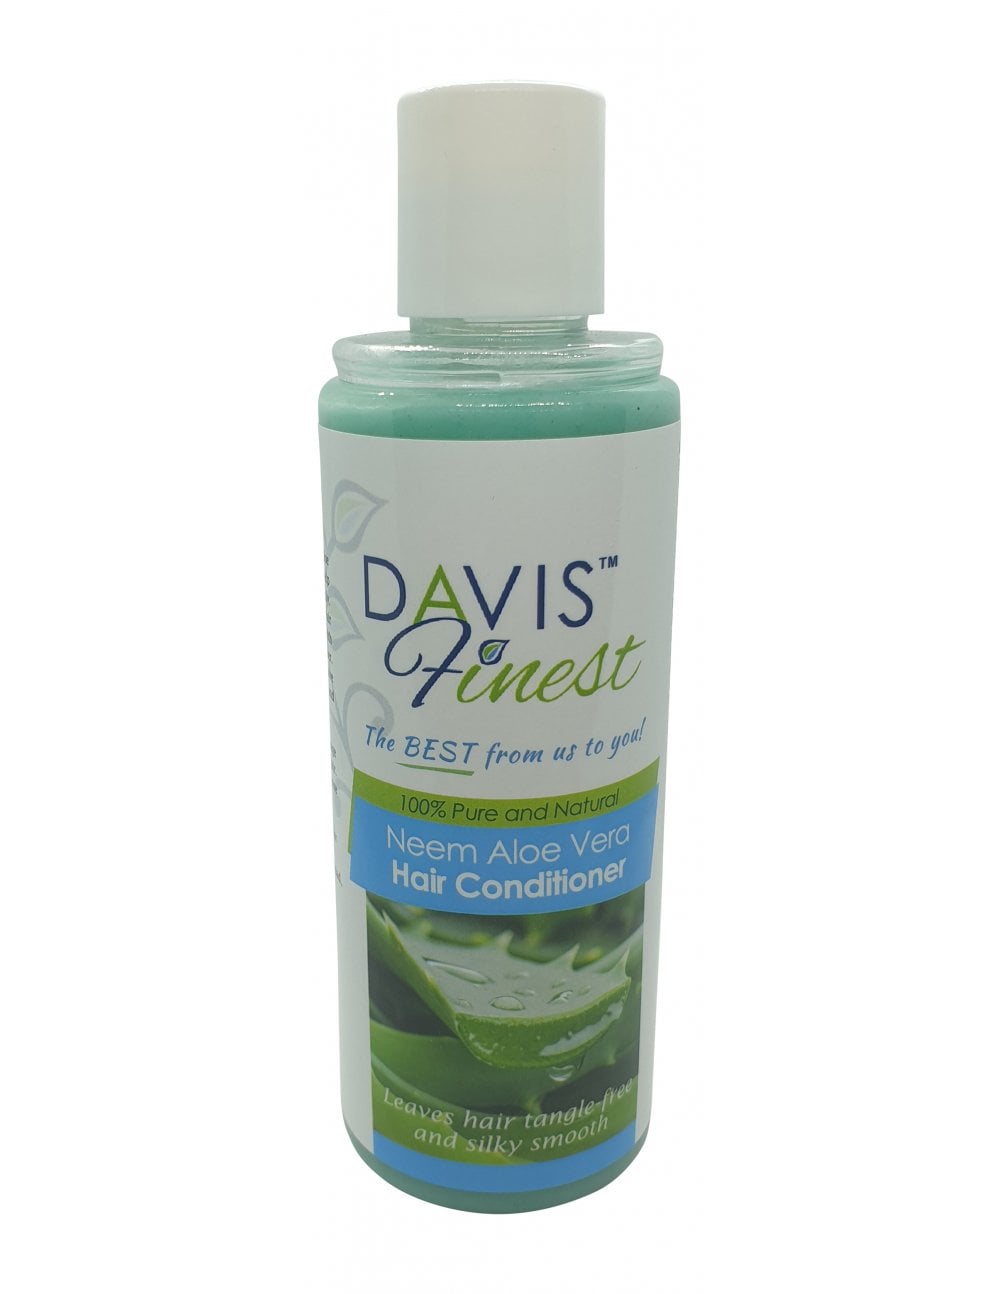 Neem Aloe Vera Herbal Hair Conditioner davisfinest.com 5